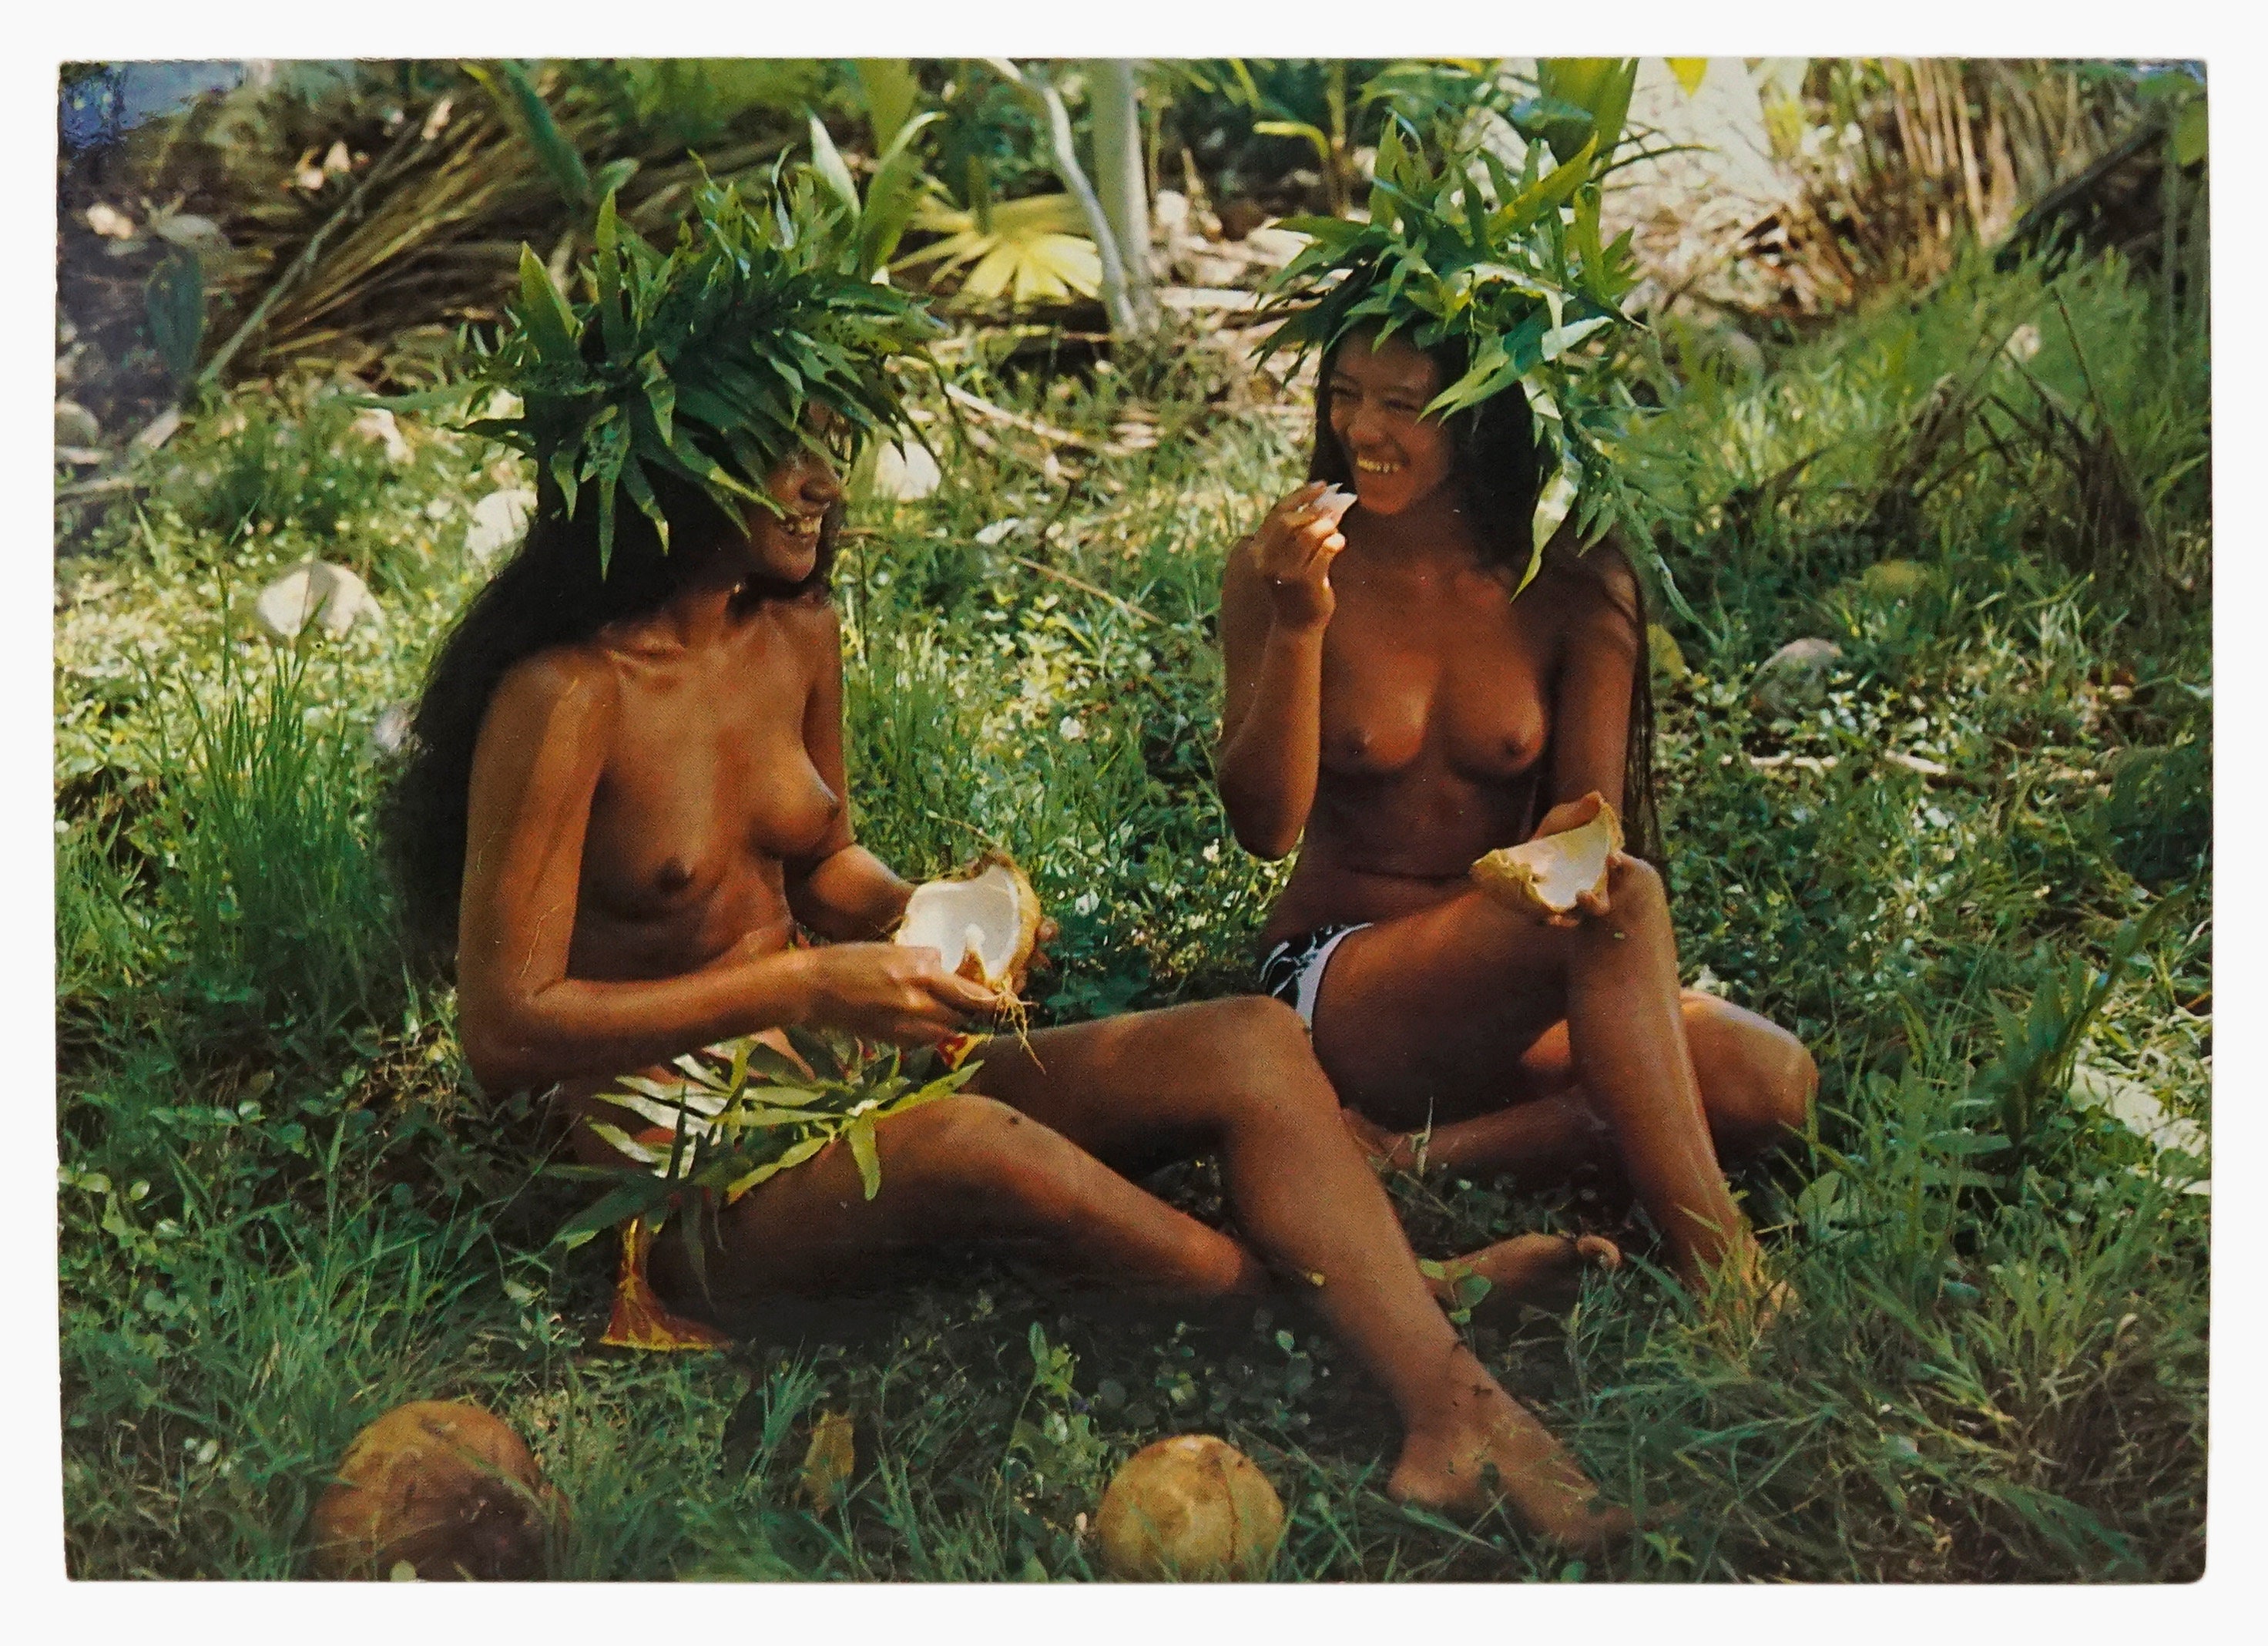 Tahiti nude women